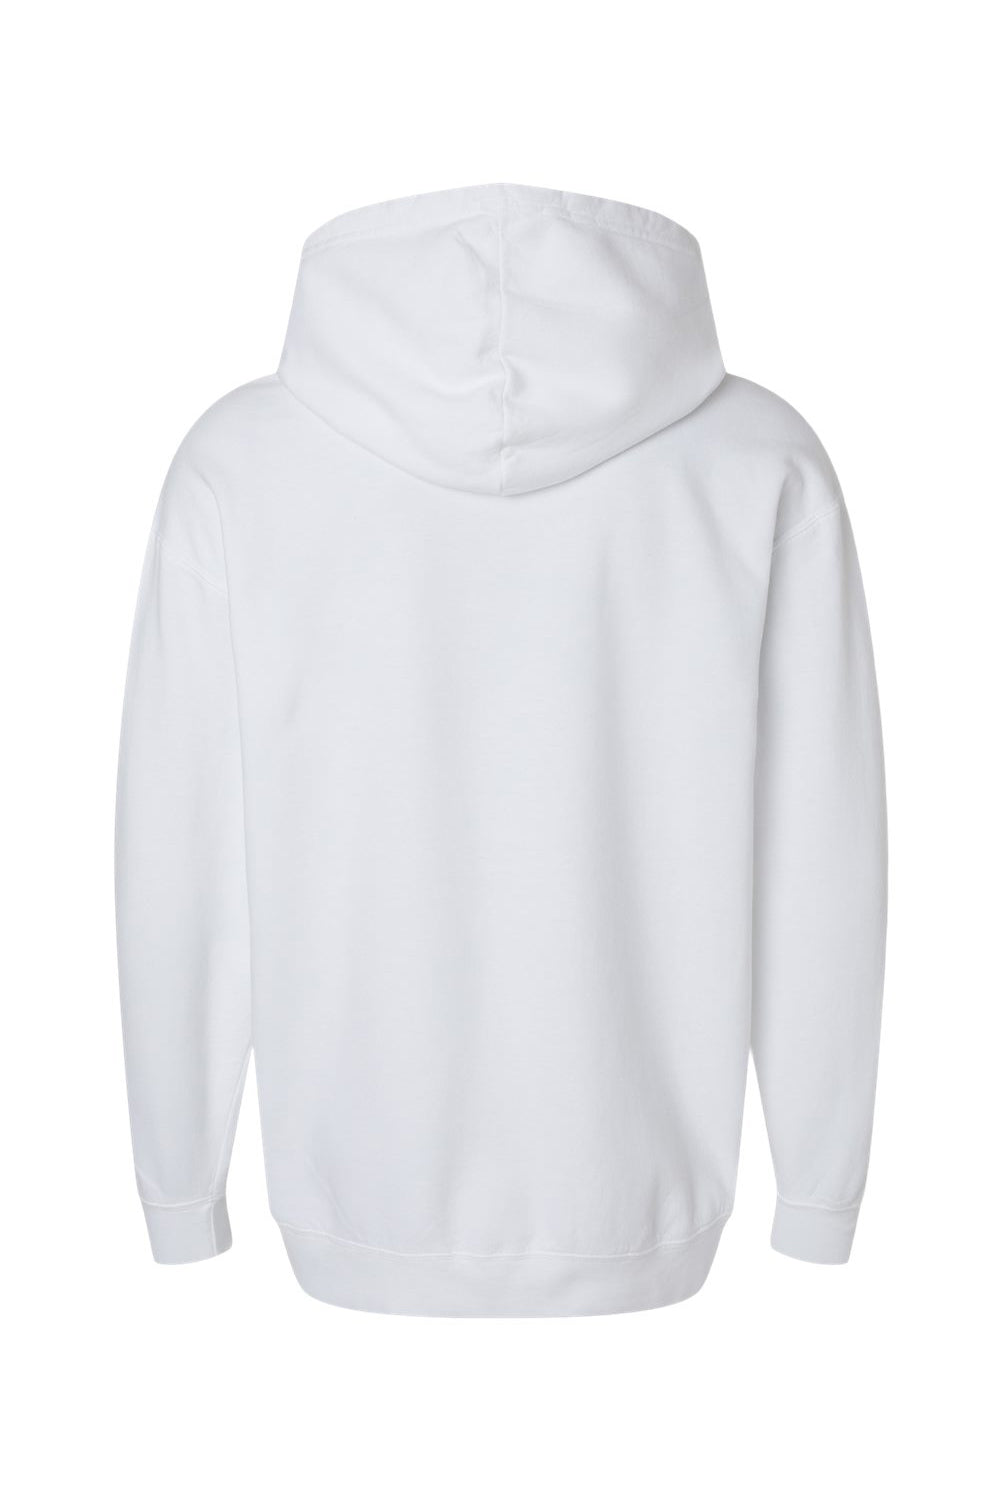 Comfort Colors 1467 Mens Garment Dyed Fleece Hooded Sweatshirt Hoodie White Flat Back